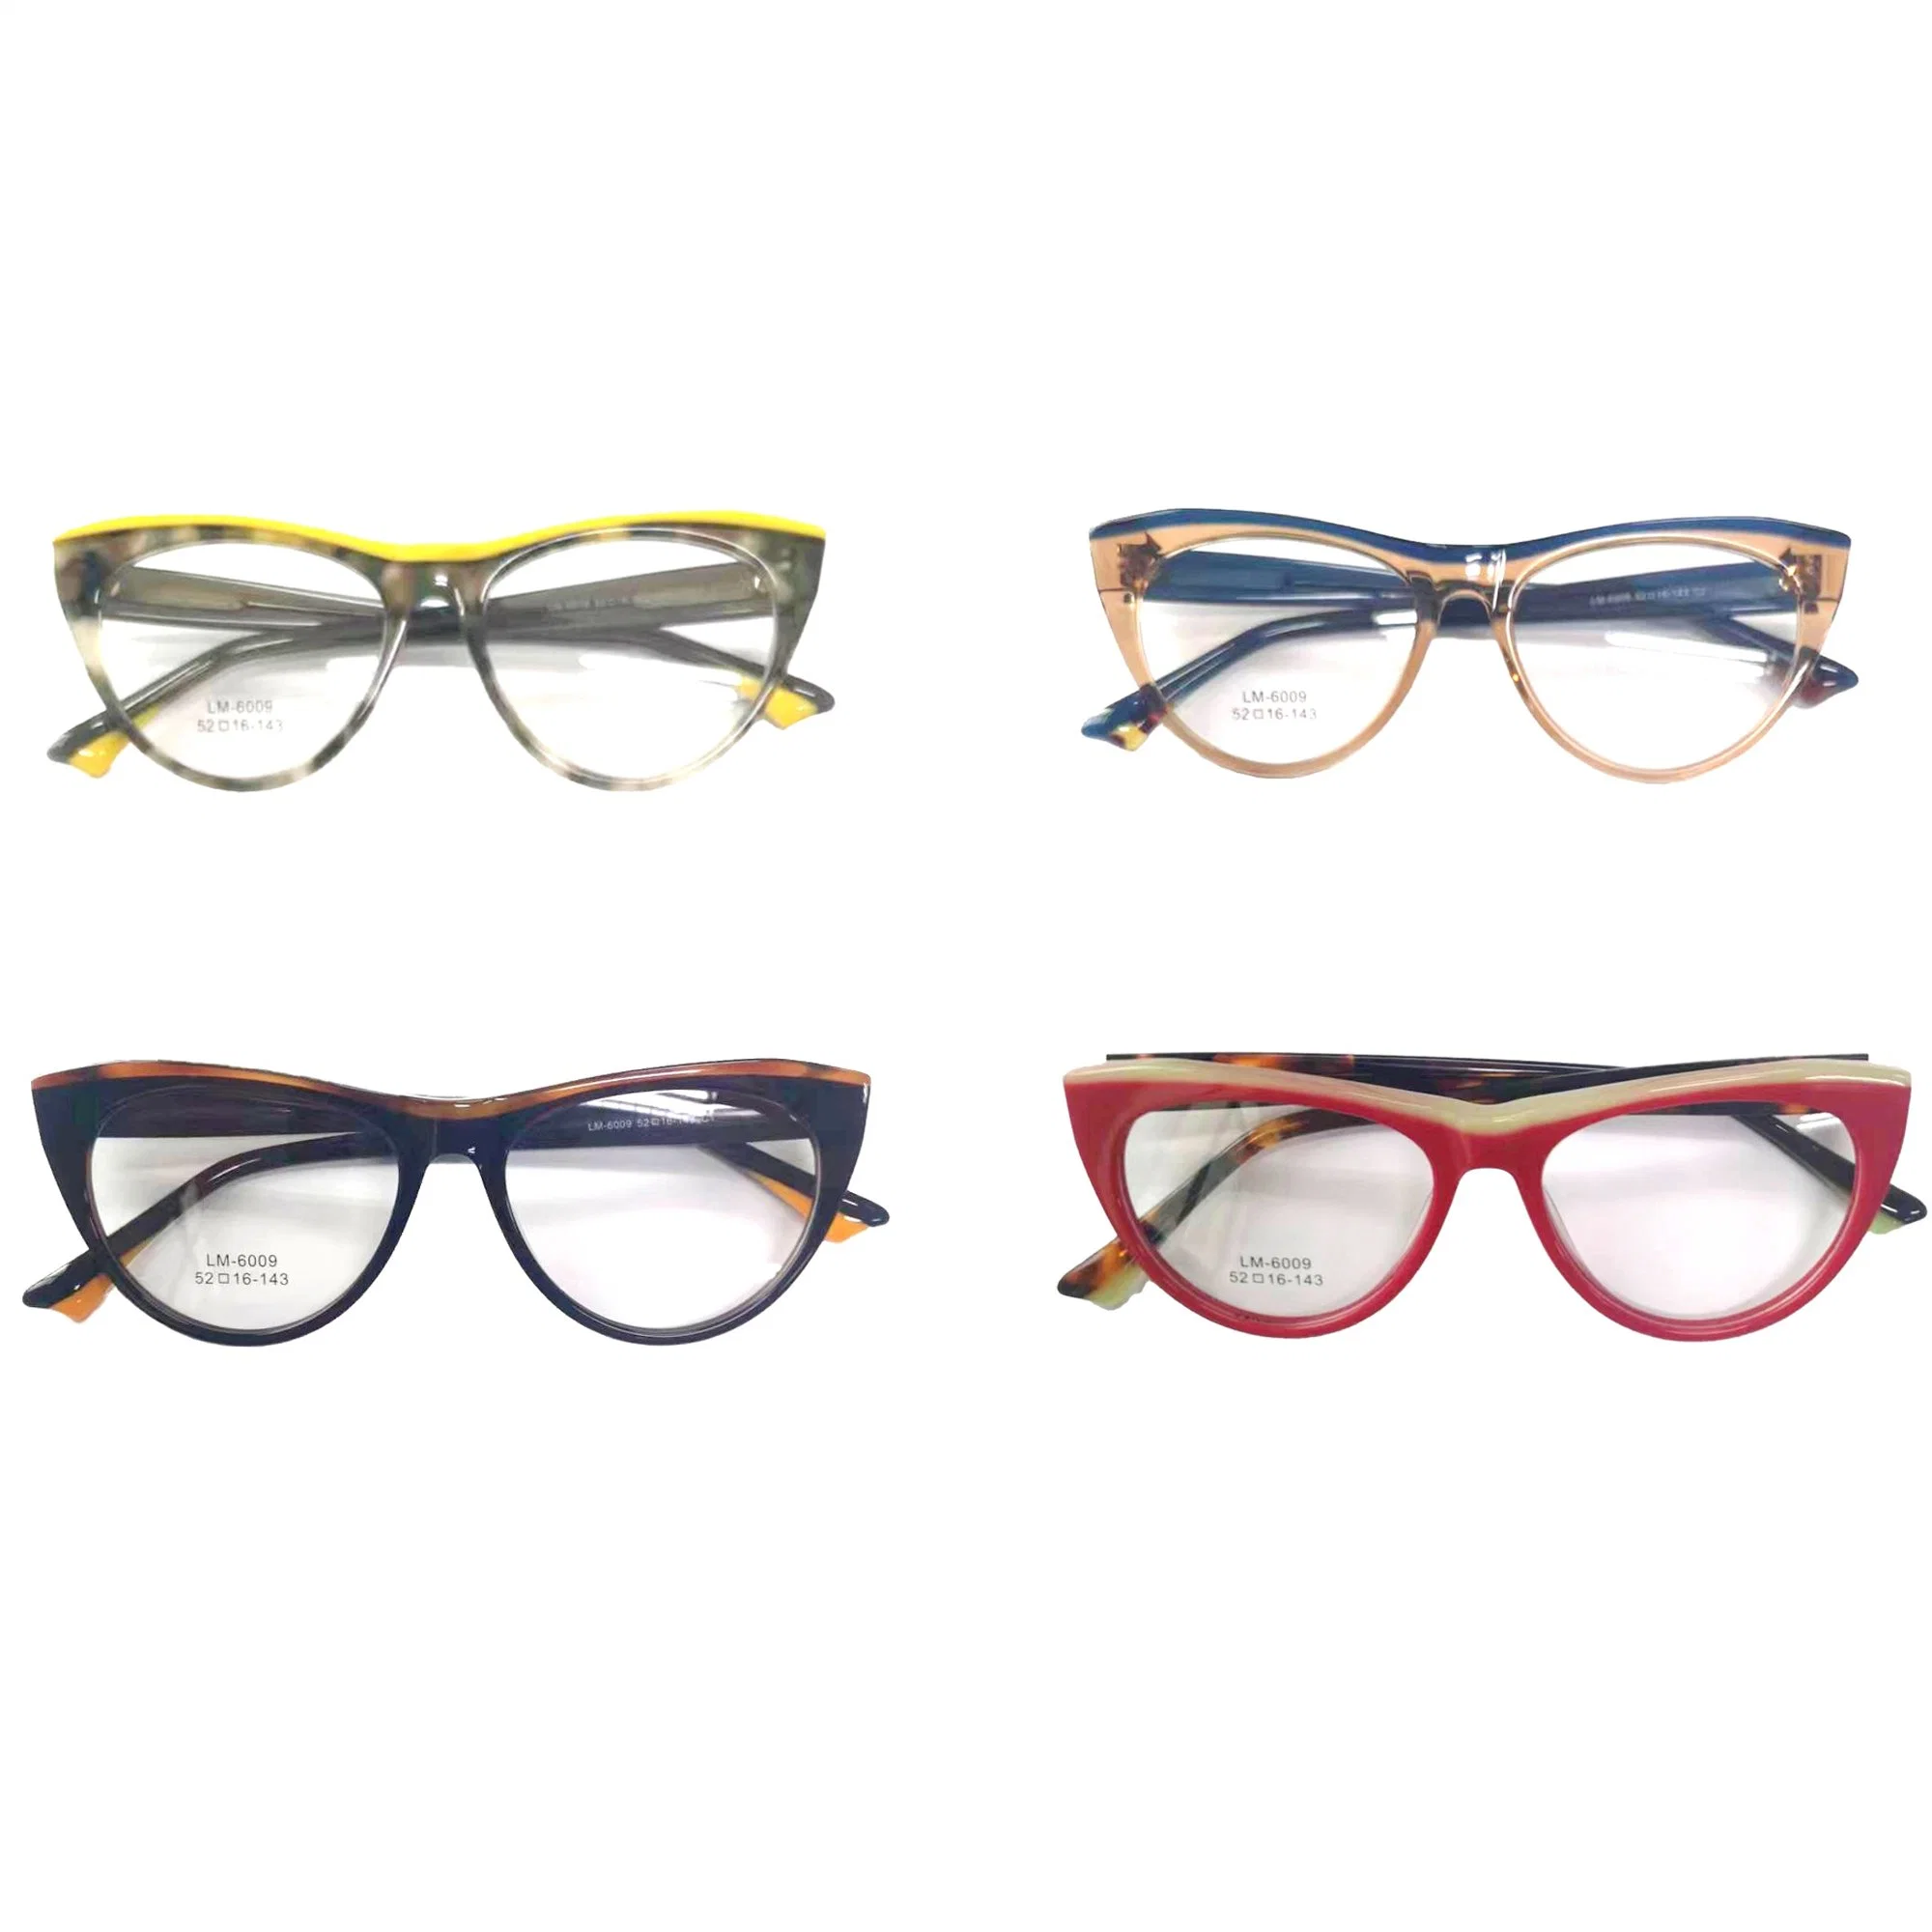 Fashion and Colorful Acetate Ladeis Eyewear Optical Reading Glasses Frame